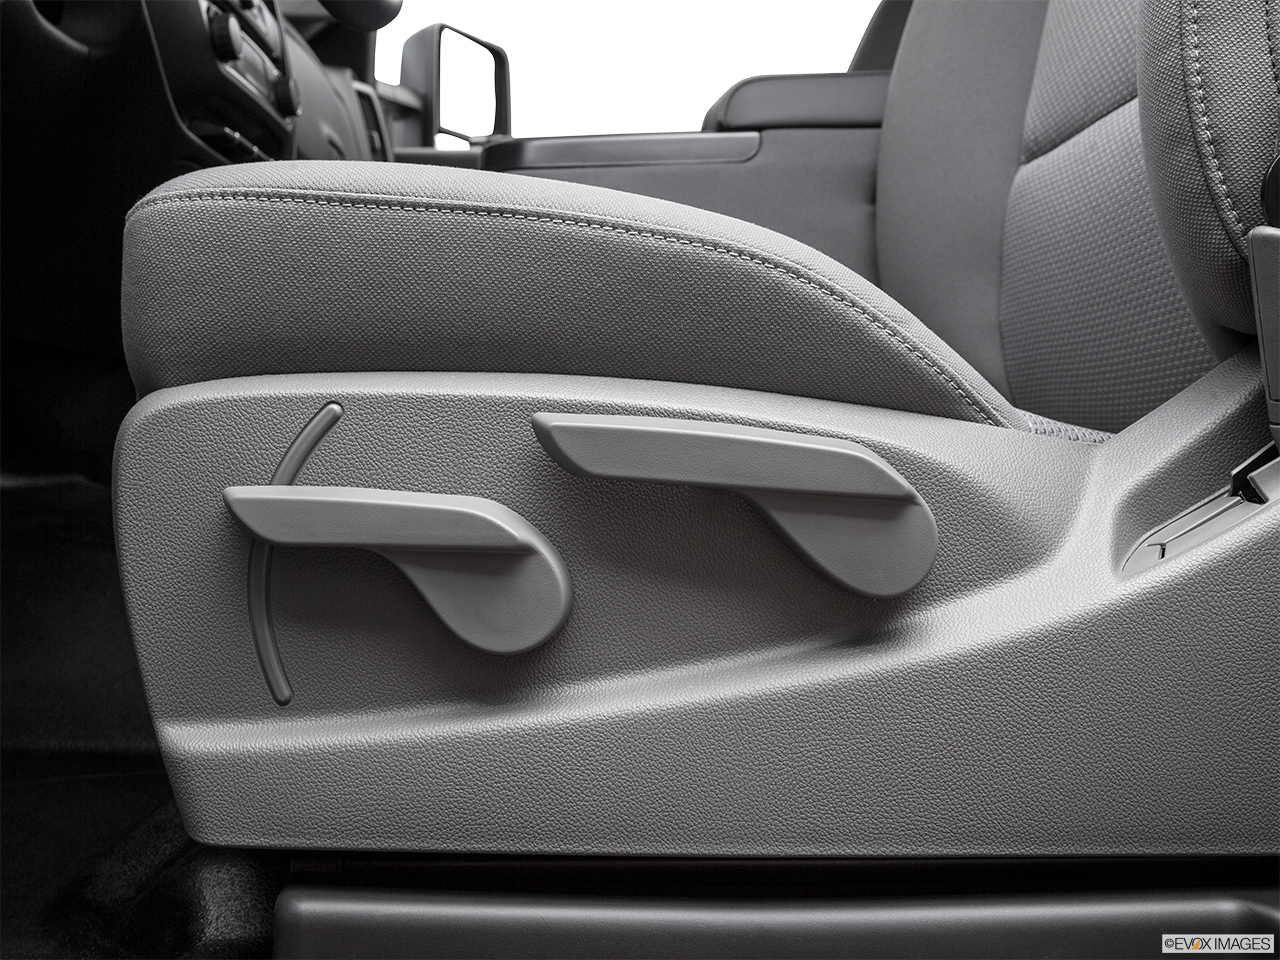 2016 GMC Sierra 2500HD Base Seat Adjustment Controllers. 